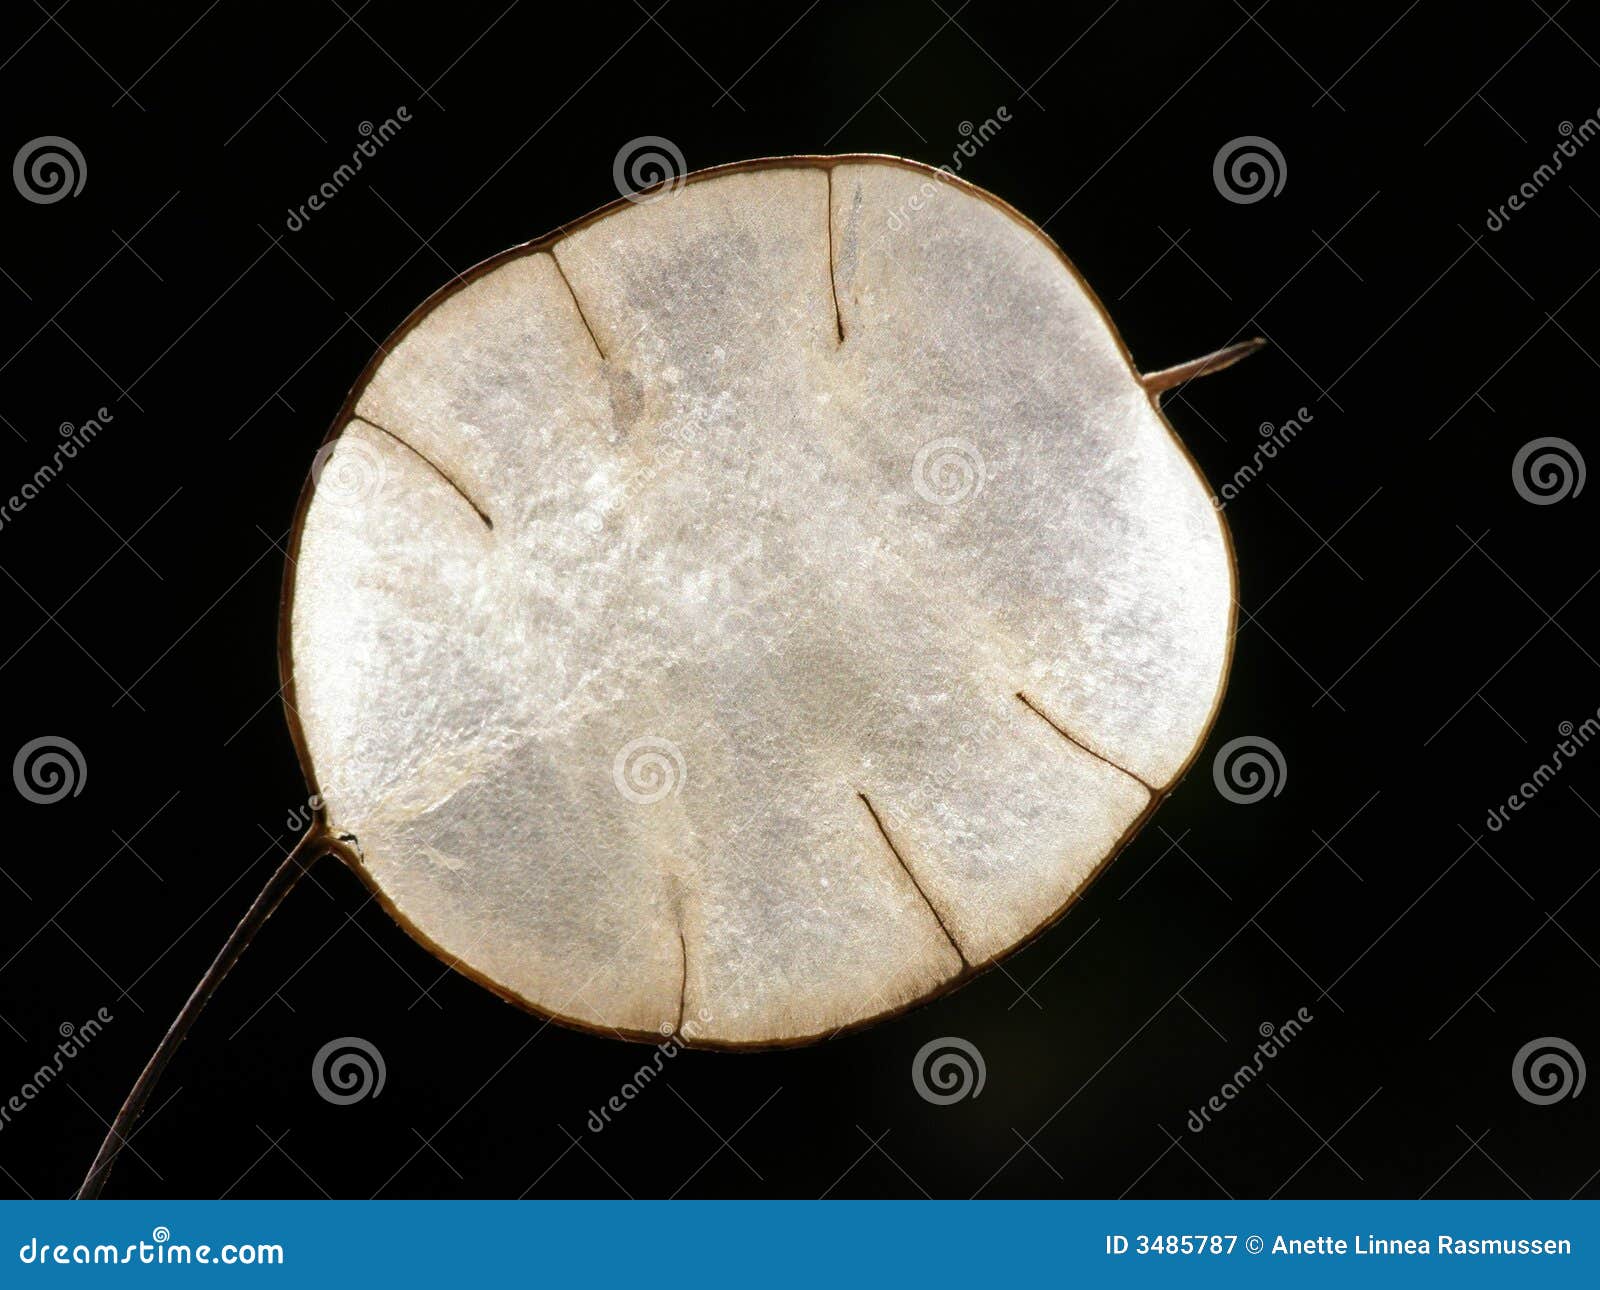 transparent lunaria seed